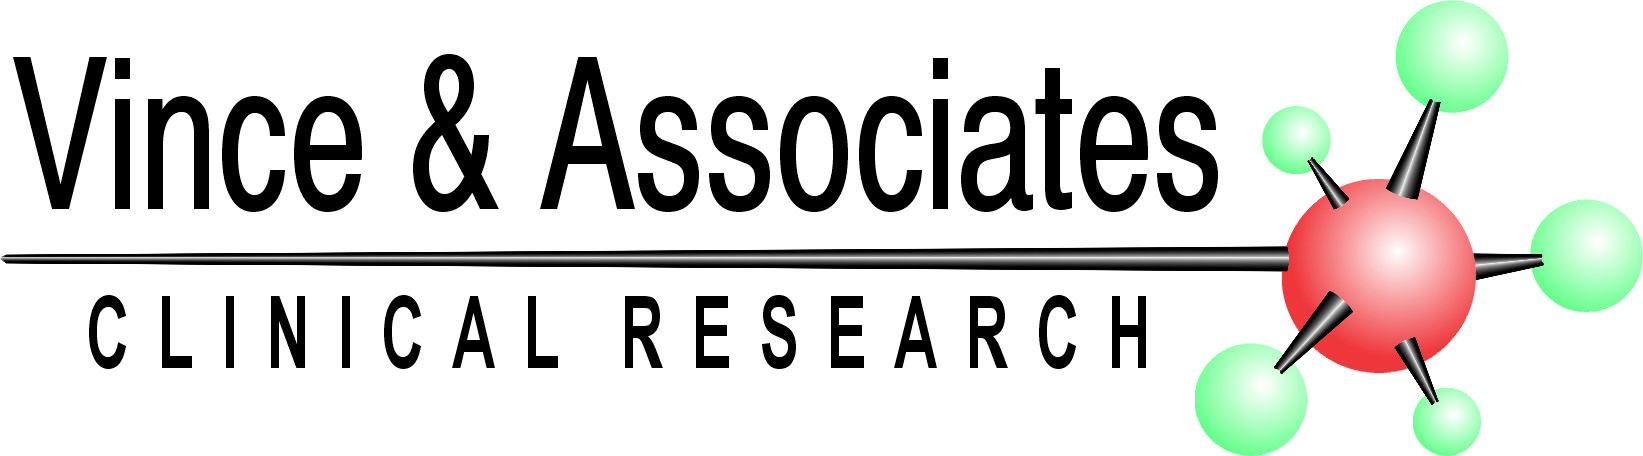 vince & associates clinical research logo